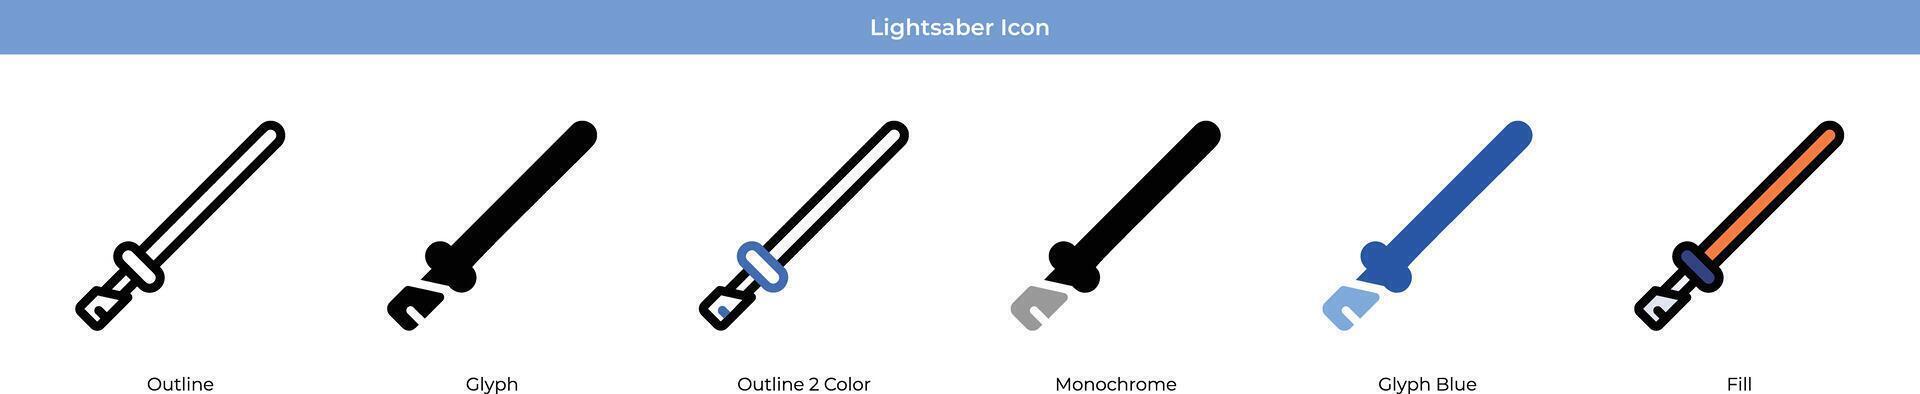 Lightsaber Icon Set vector